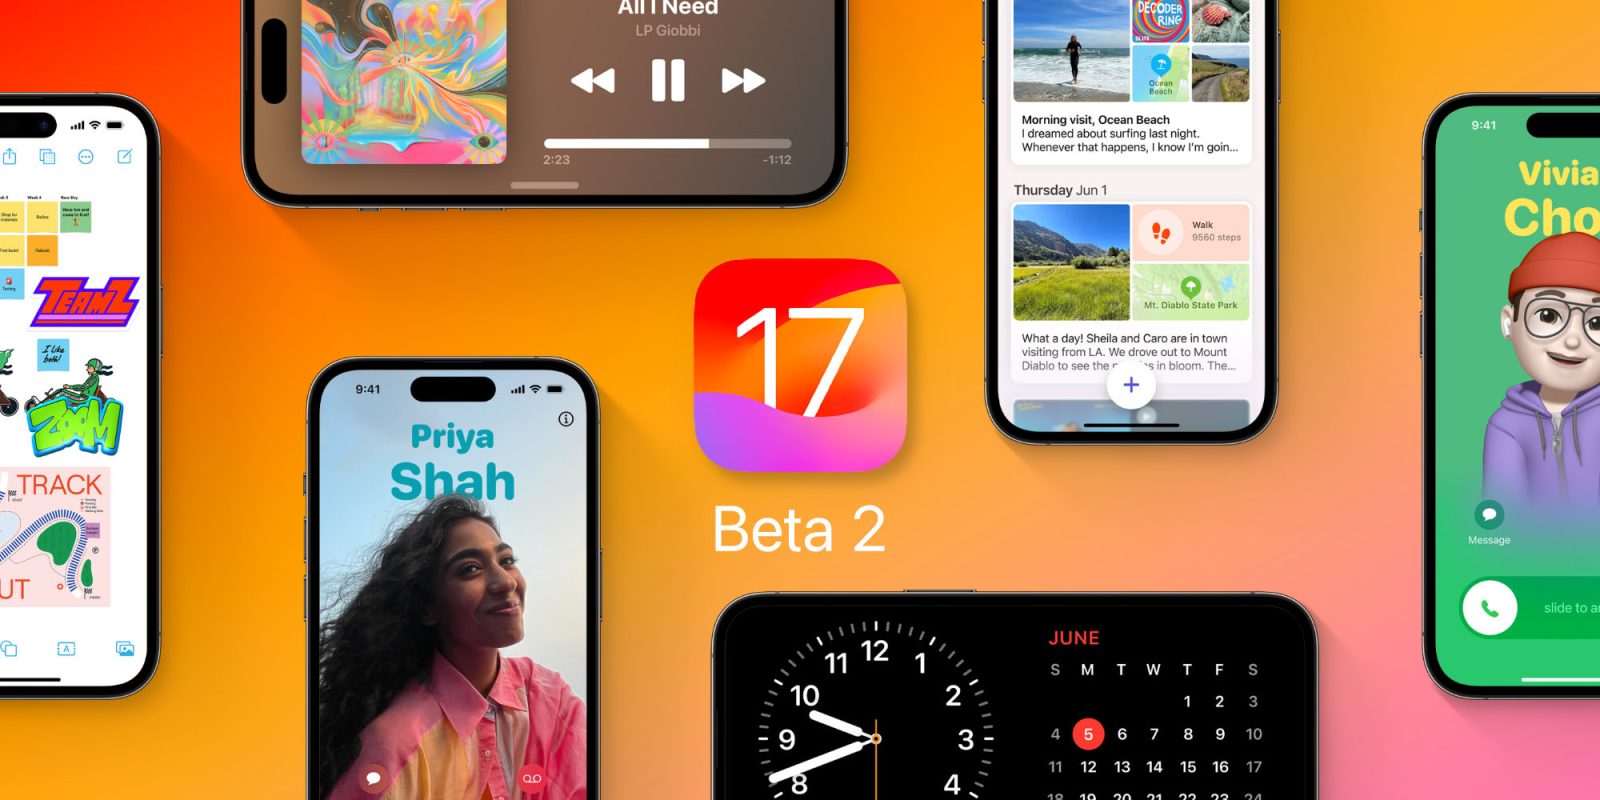 iOS 17 Beta 2